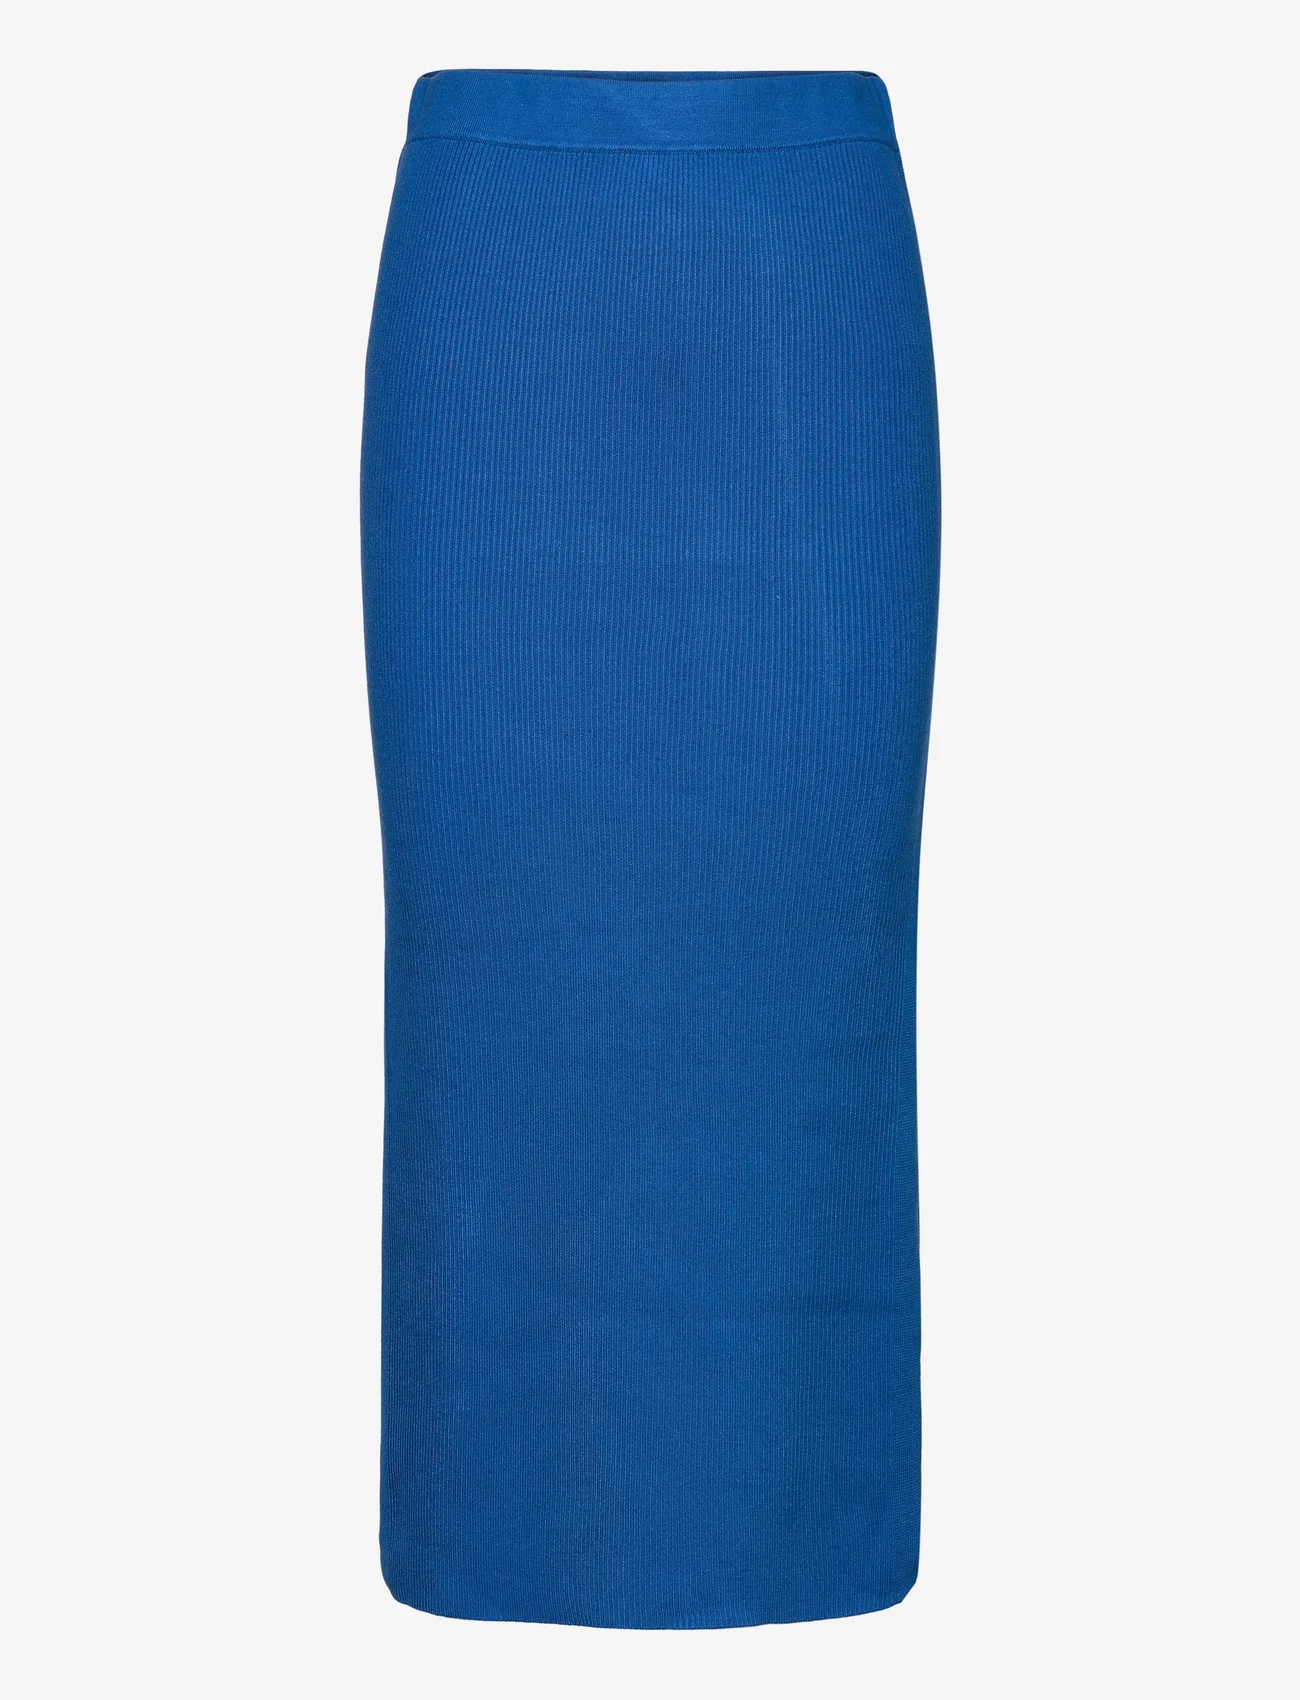 NORR - Sherry knit skirt - strickröcke - royal blue - 0